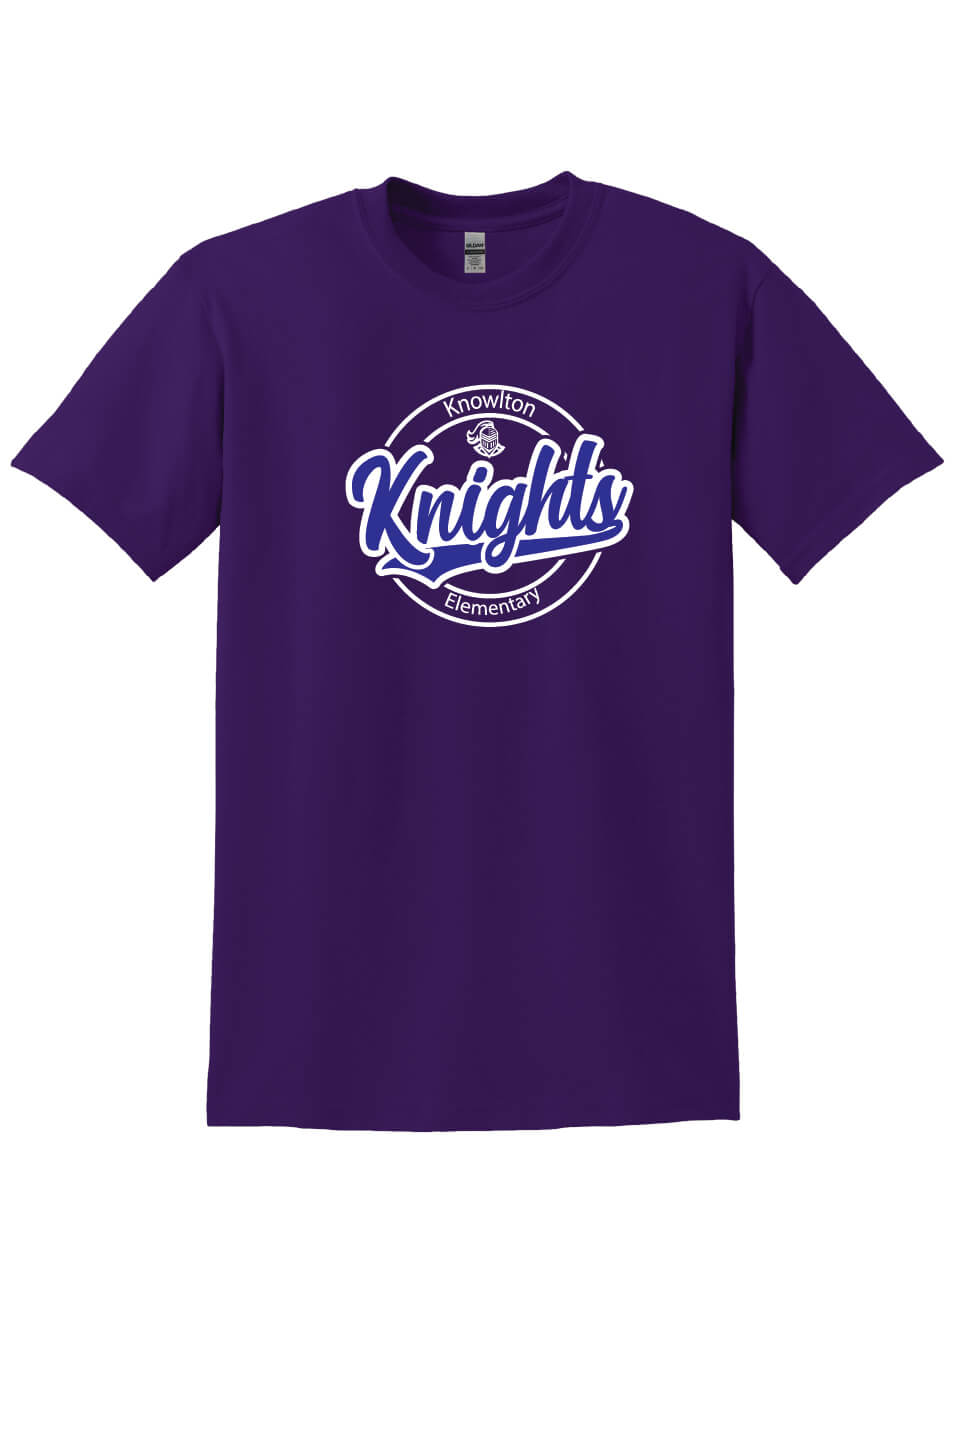 Knowlton Elementary Knights Short Sleeve T-Shirt purple